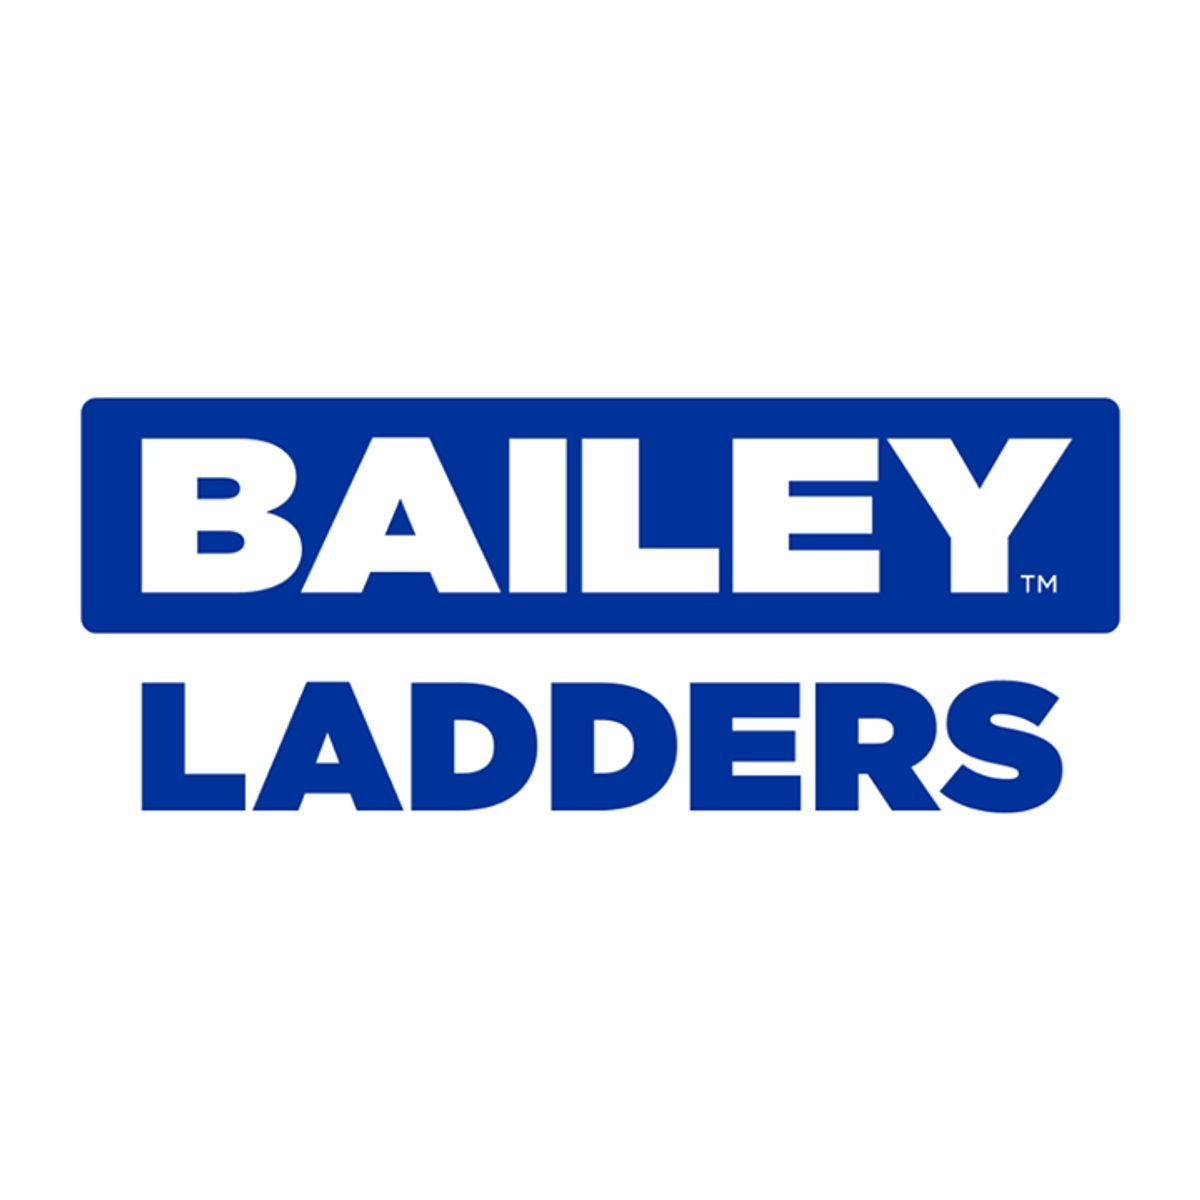 BAILEY-LADDERS